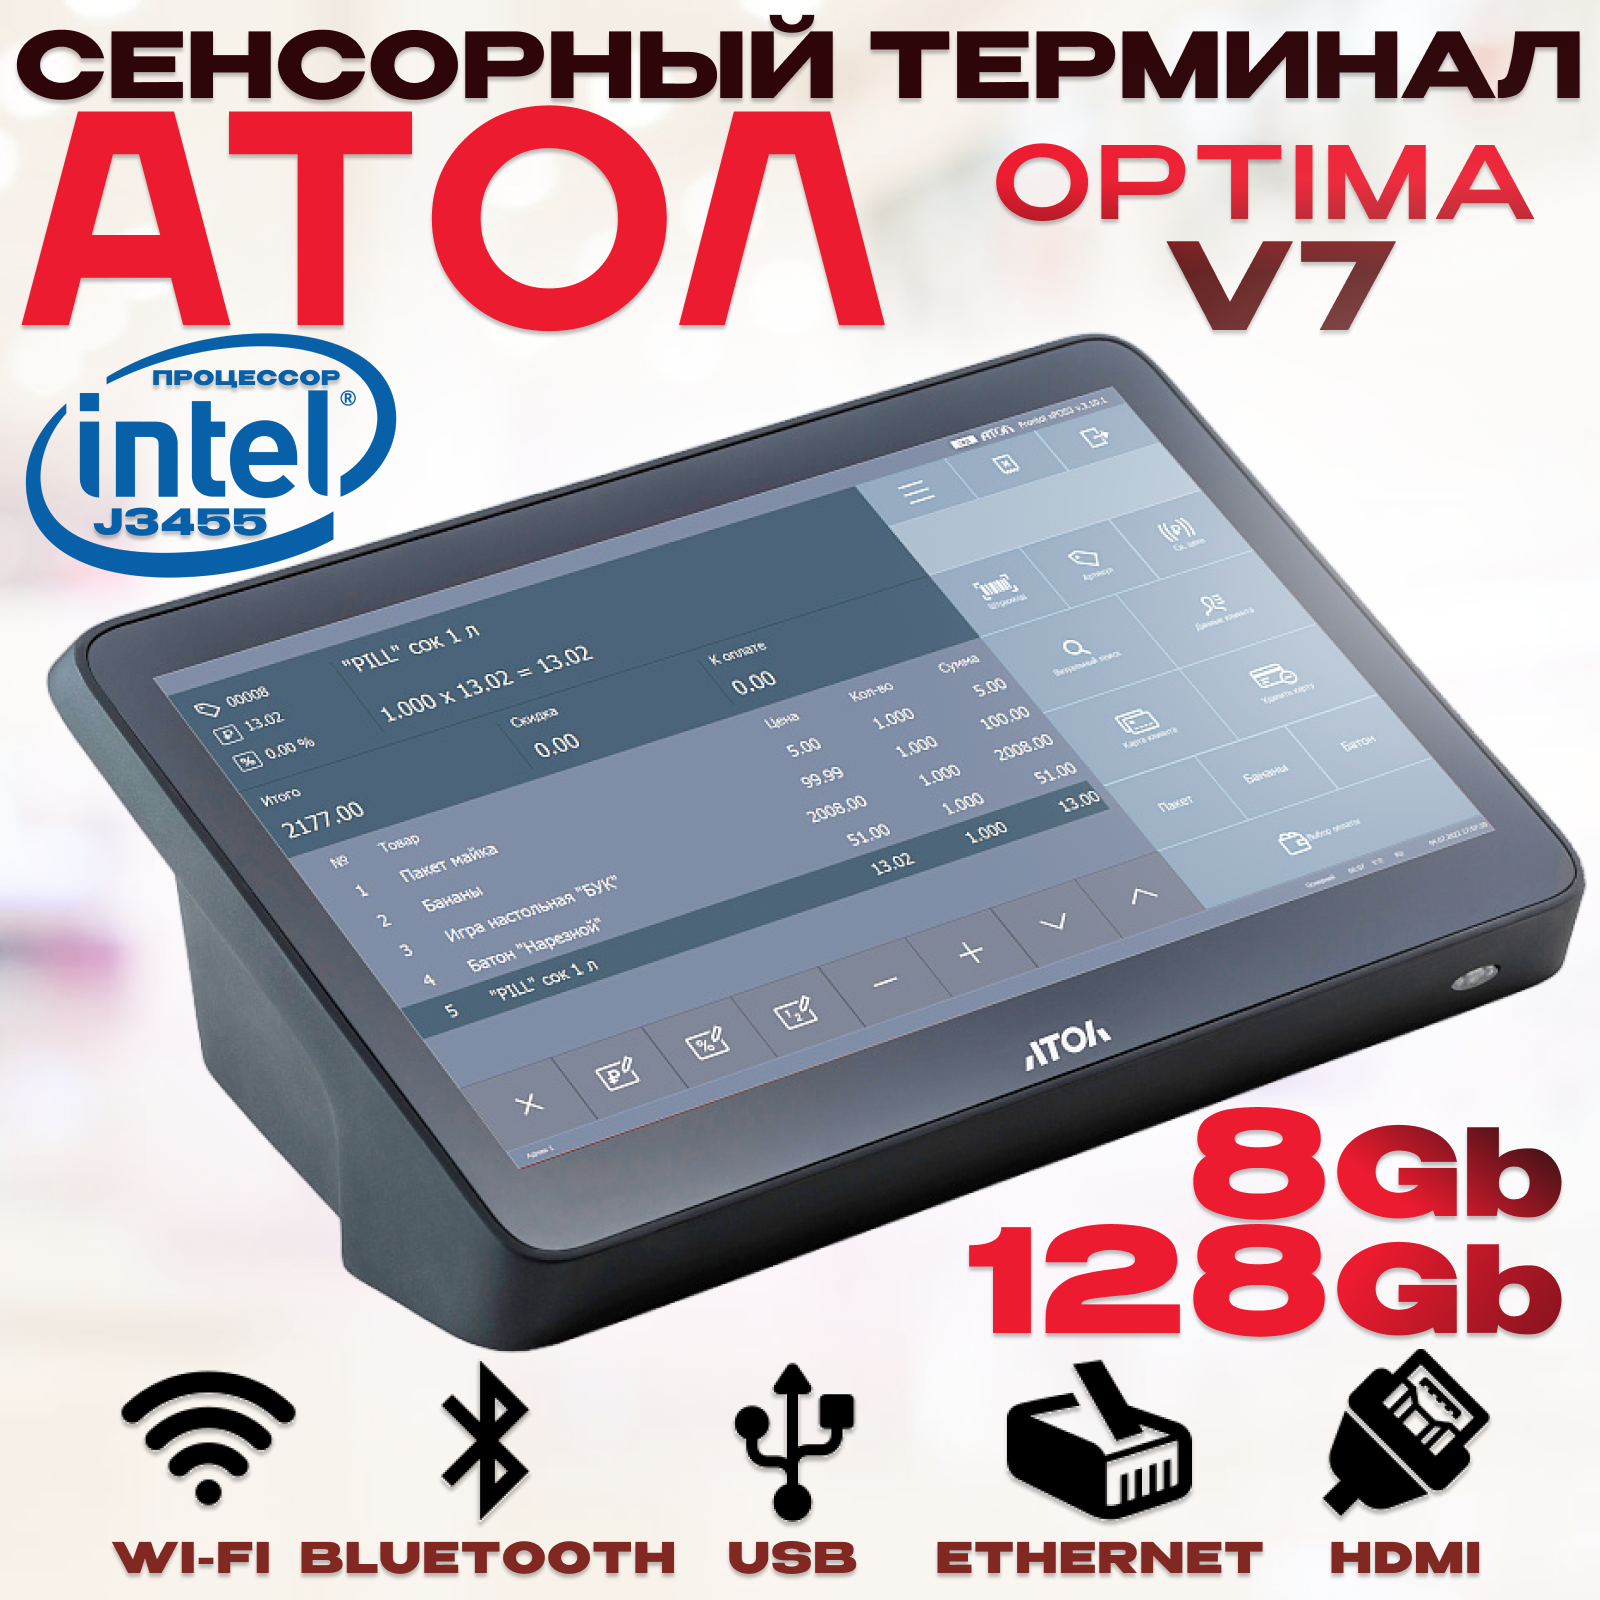 Сенсорный pos-терминал АТОЛ Оптима (ATOL Optima)V7 8 ГБ ОЗУ, 128 ГБ, без Windows 10